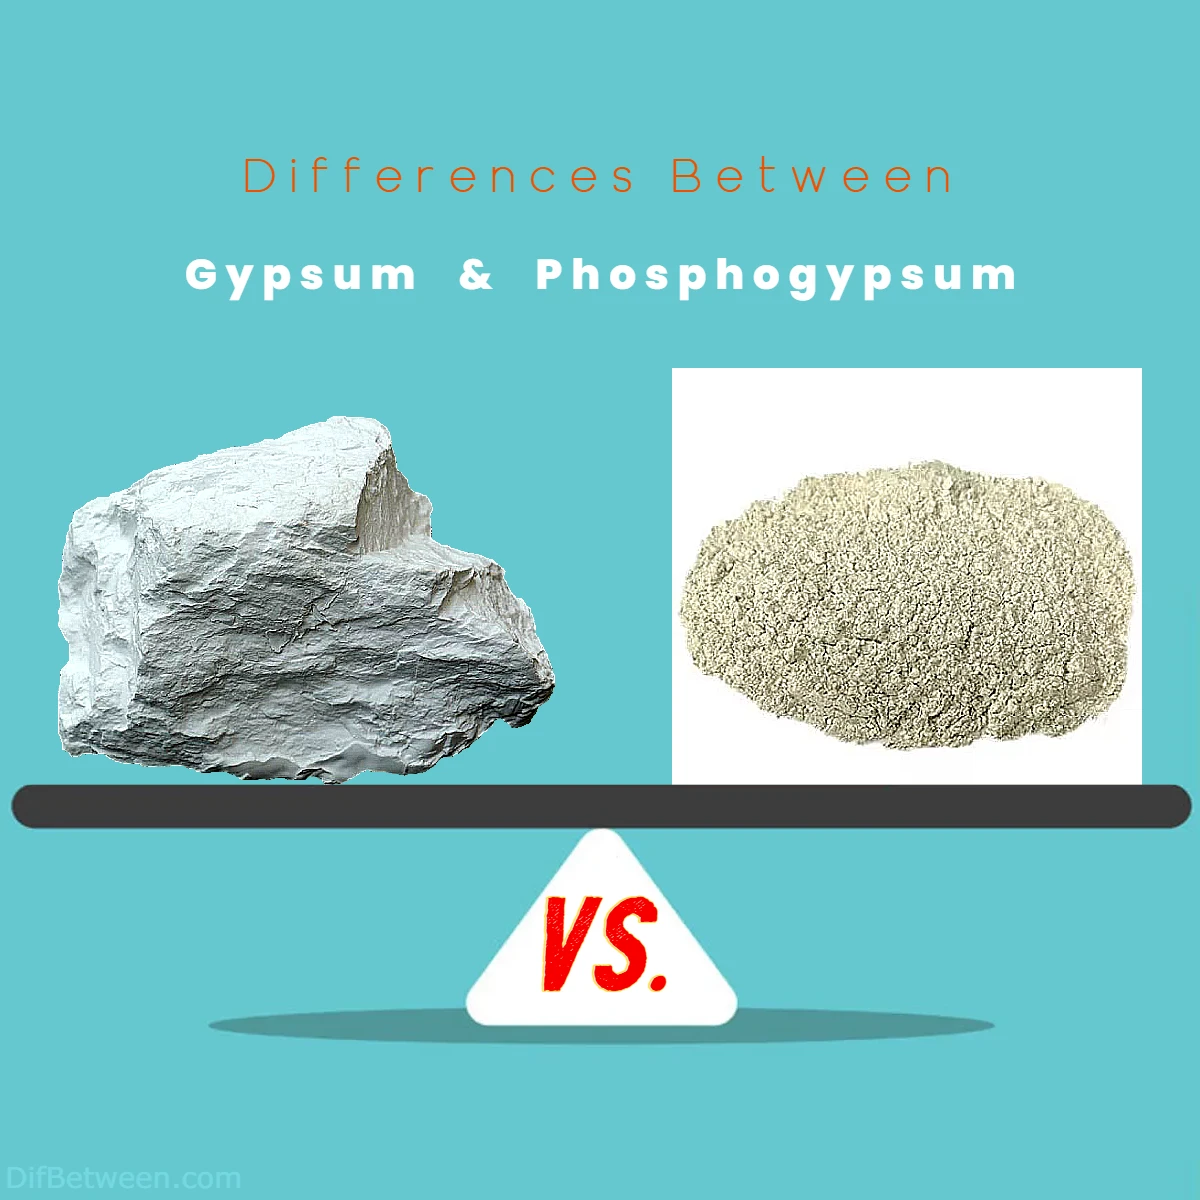 Differences Between Gypsum vs Phosphogypsum